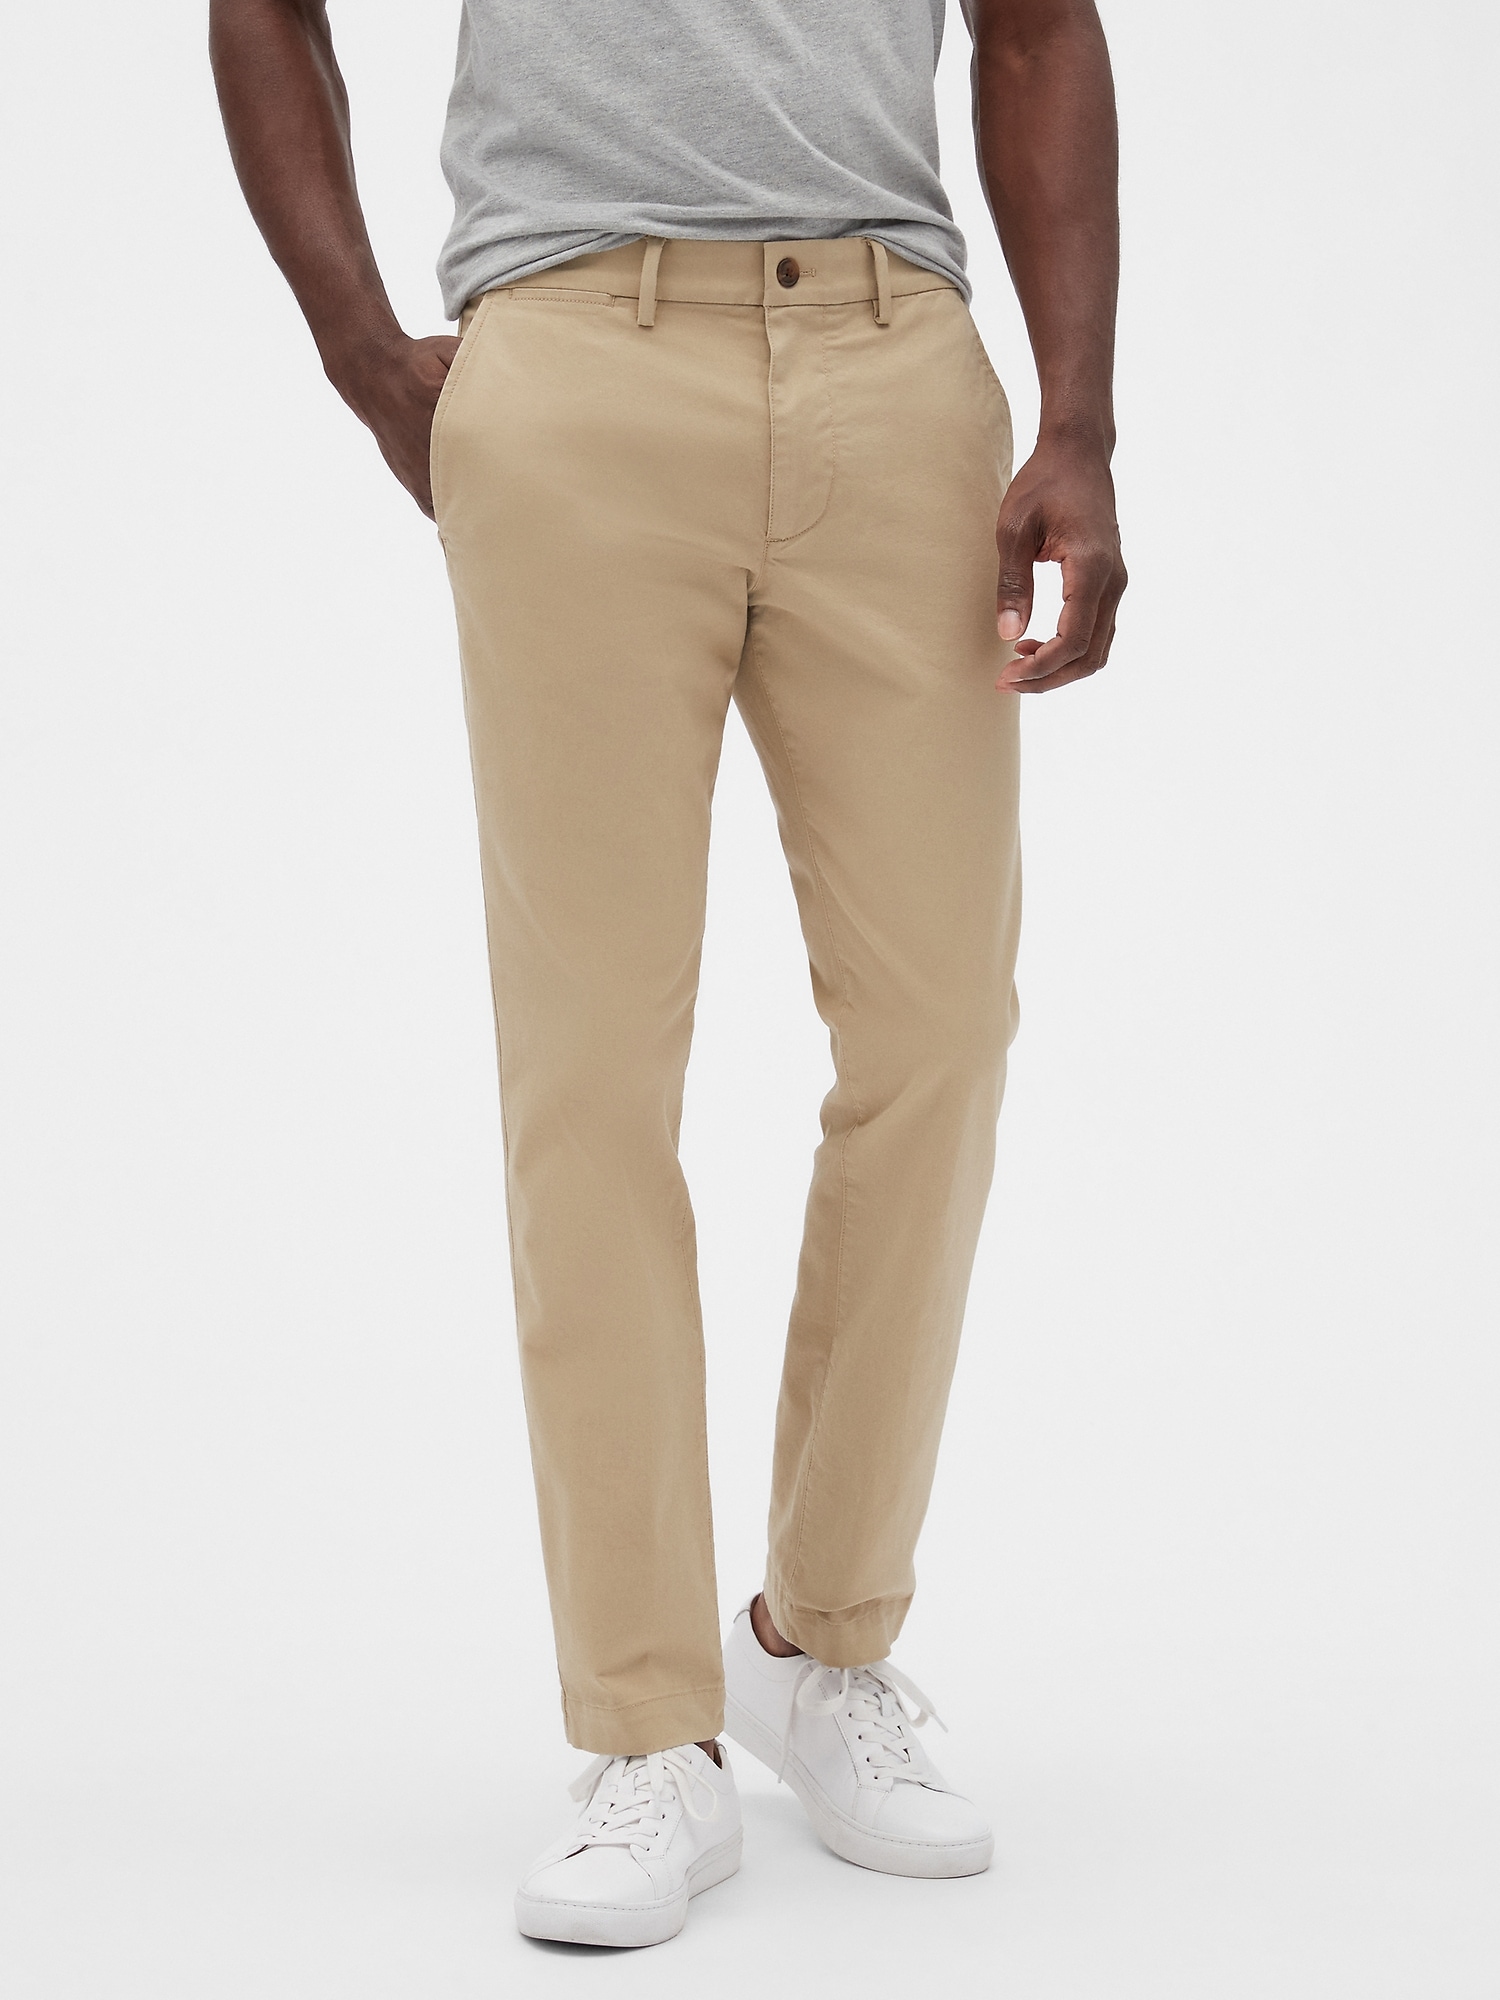 Het is goedkoop verlangen Afleiden GapFlex Essential Khakis in Skinny Fit with Washwell™ | Gap Factory